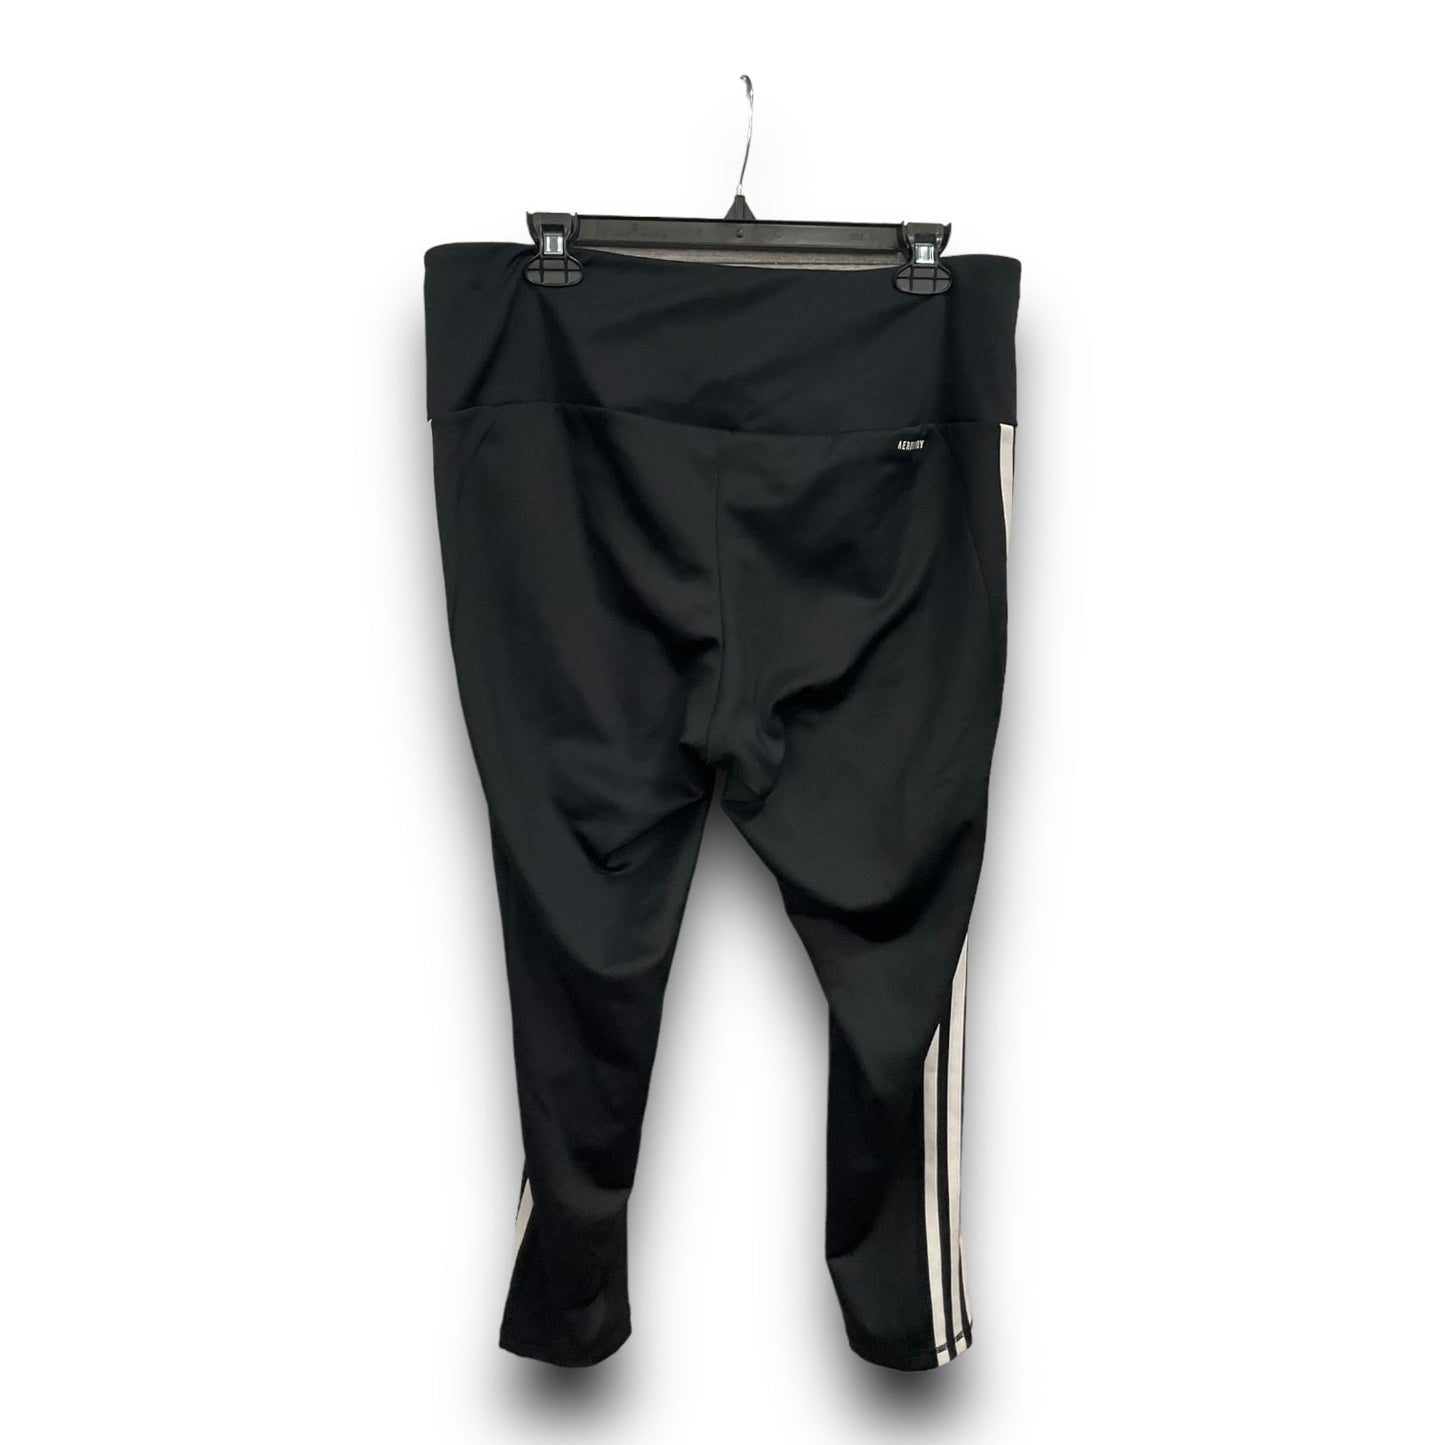 Black Athletic Leggings Adidas, Size 2x